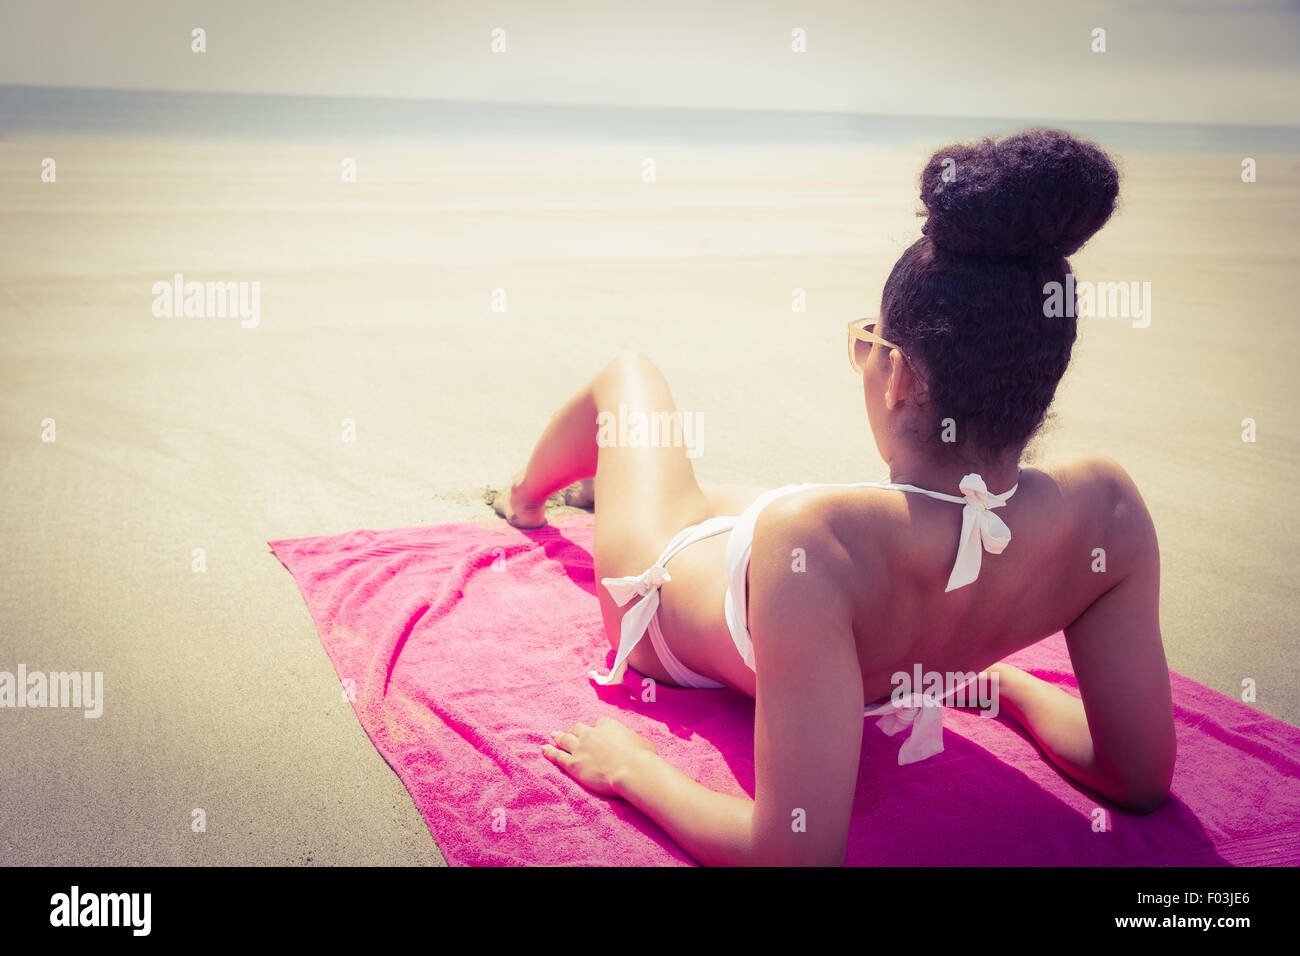 Slim woman sunbathing on towel Banque D'Images